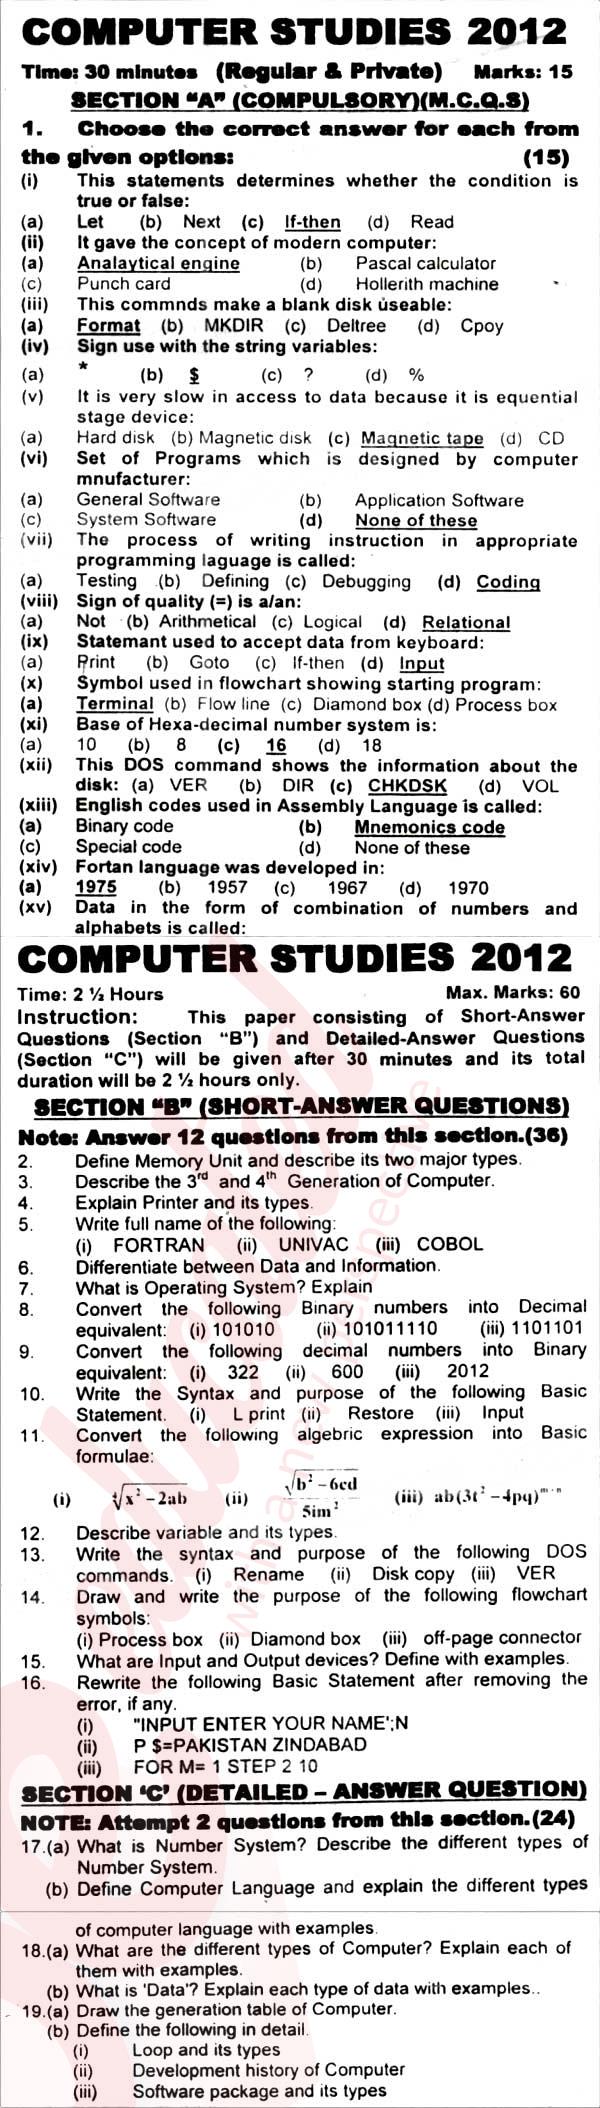 Computer Science 10th English Medium Past Paper Group 1 KPBTE 2012